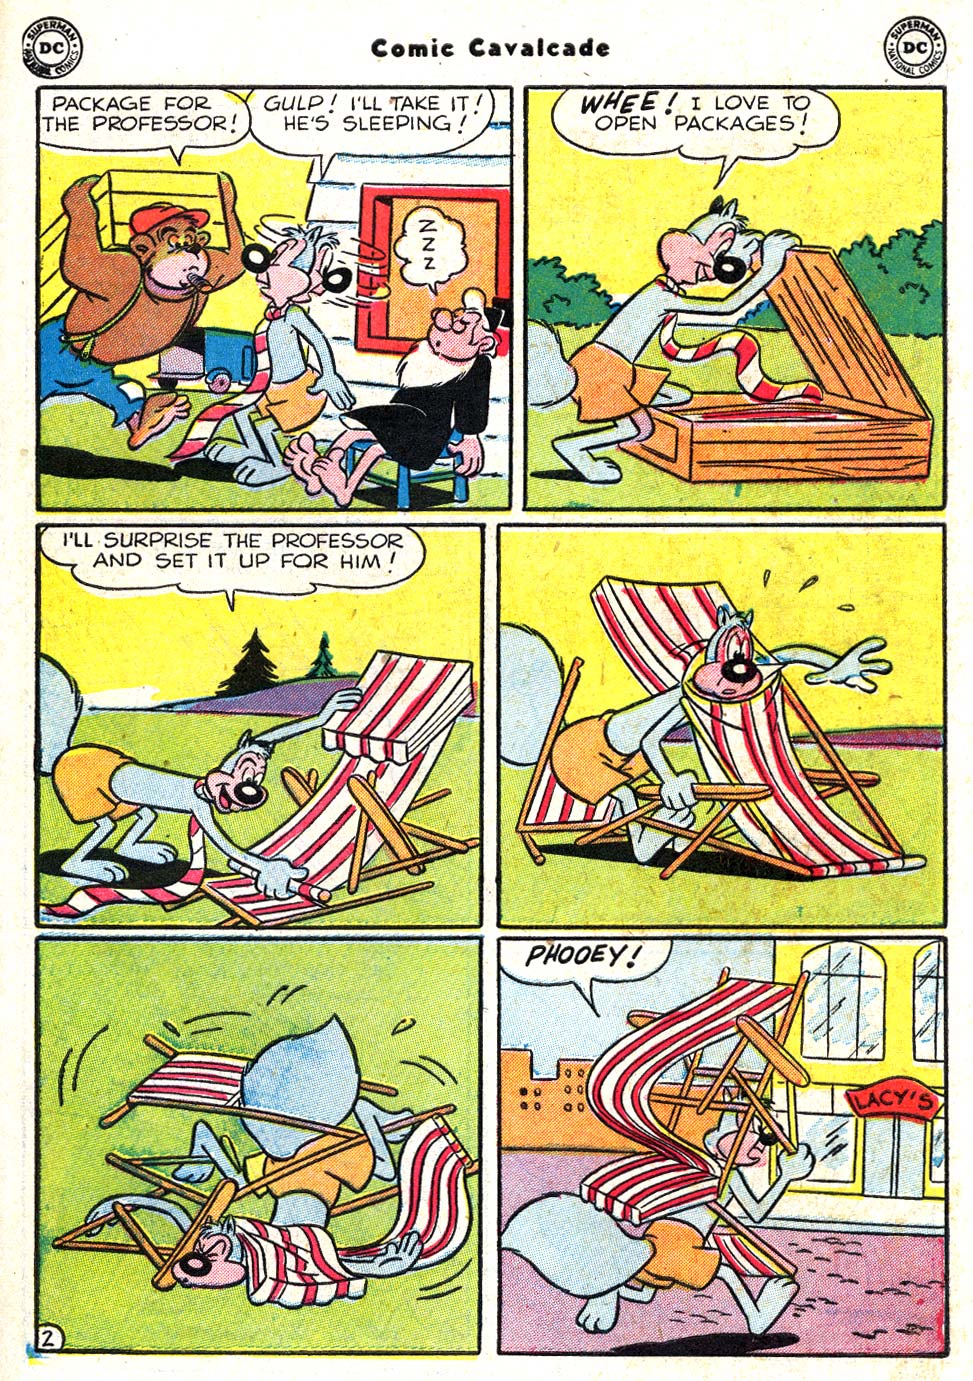 Comic Cavalcade issue 46 - Page 69